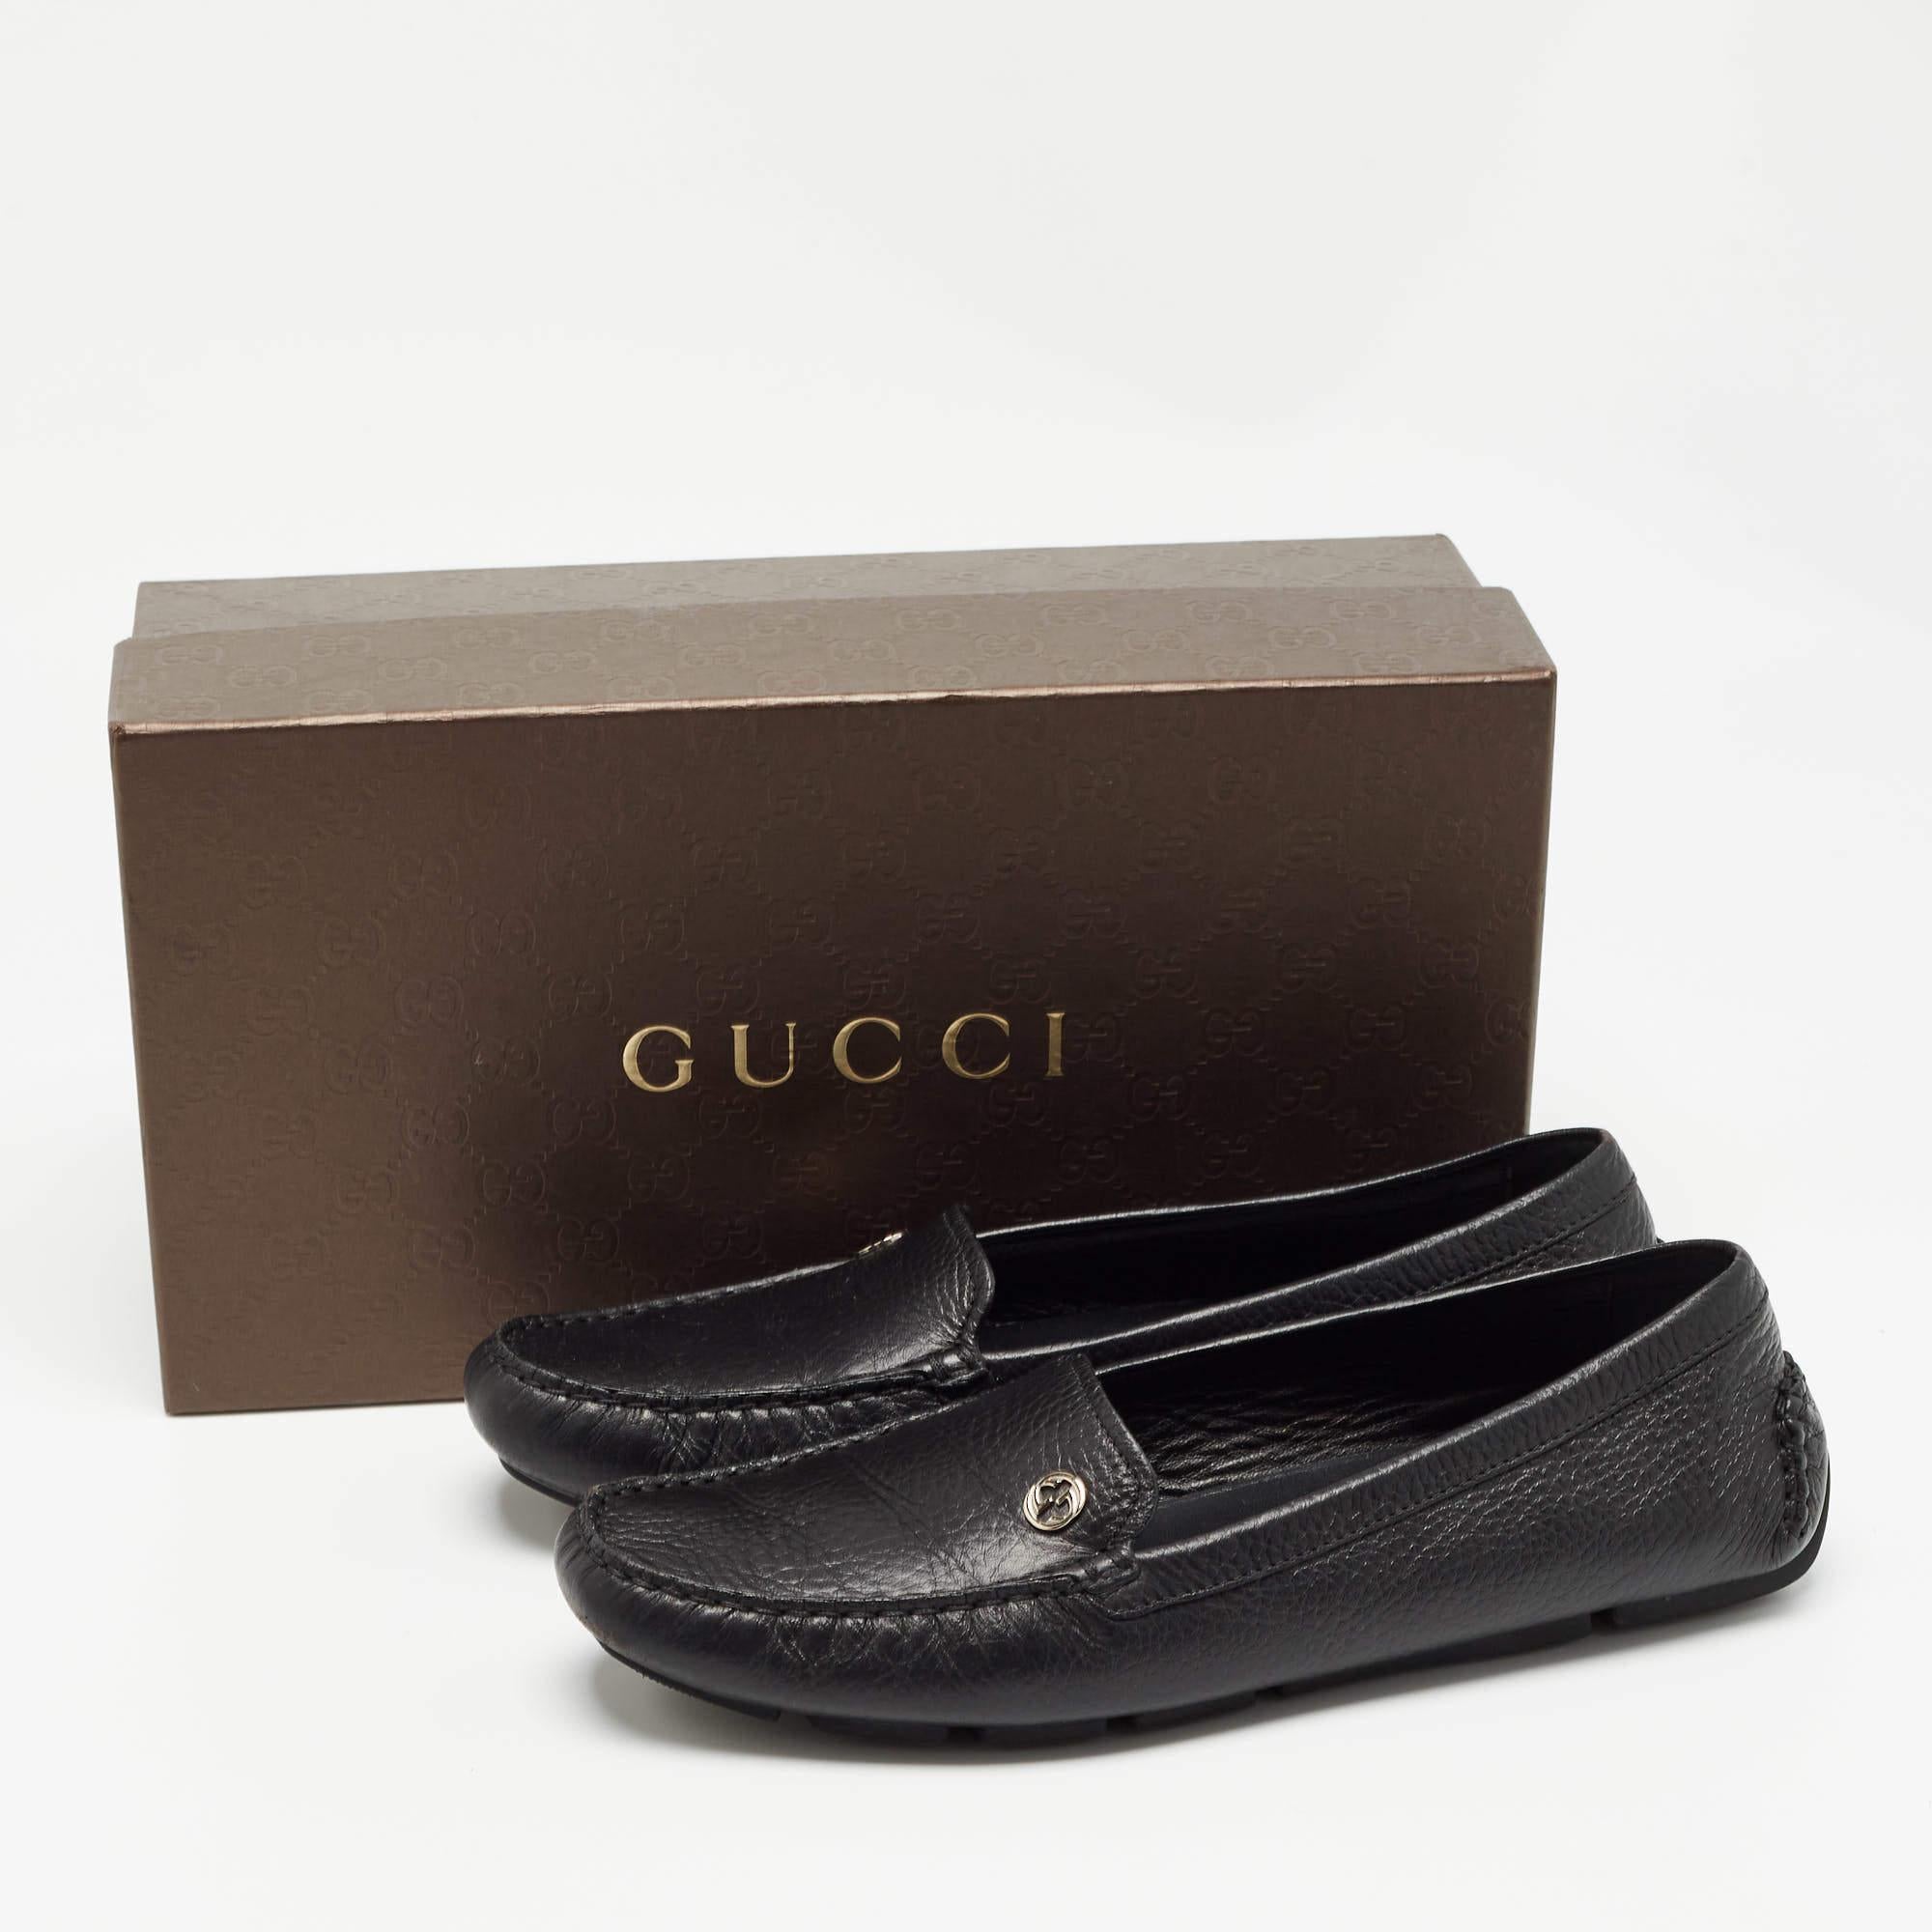 Gucci Slip On Loafers aus schwarzem Leder, Größe 39 Damen im Angebot